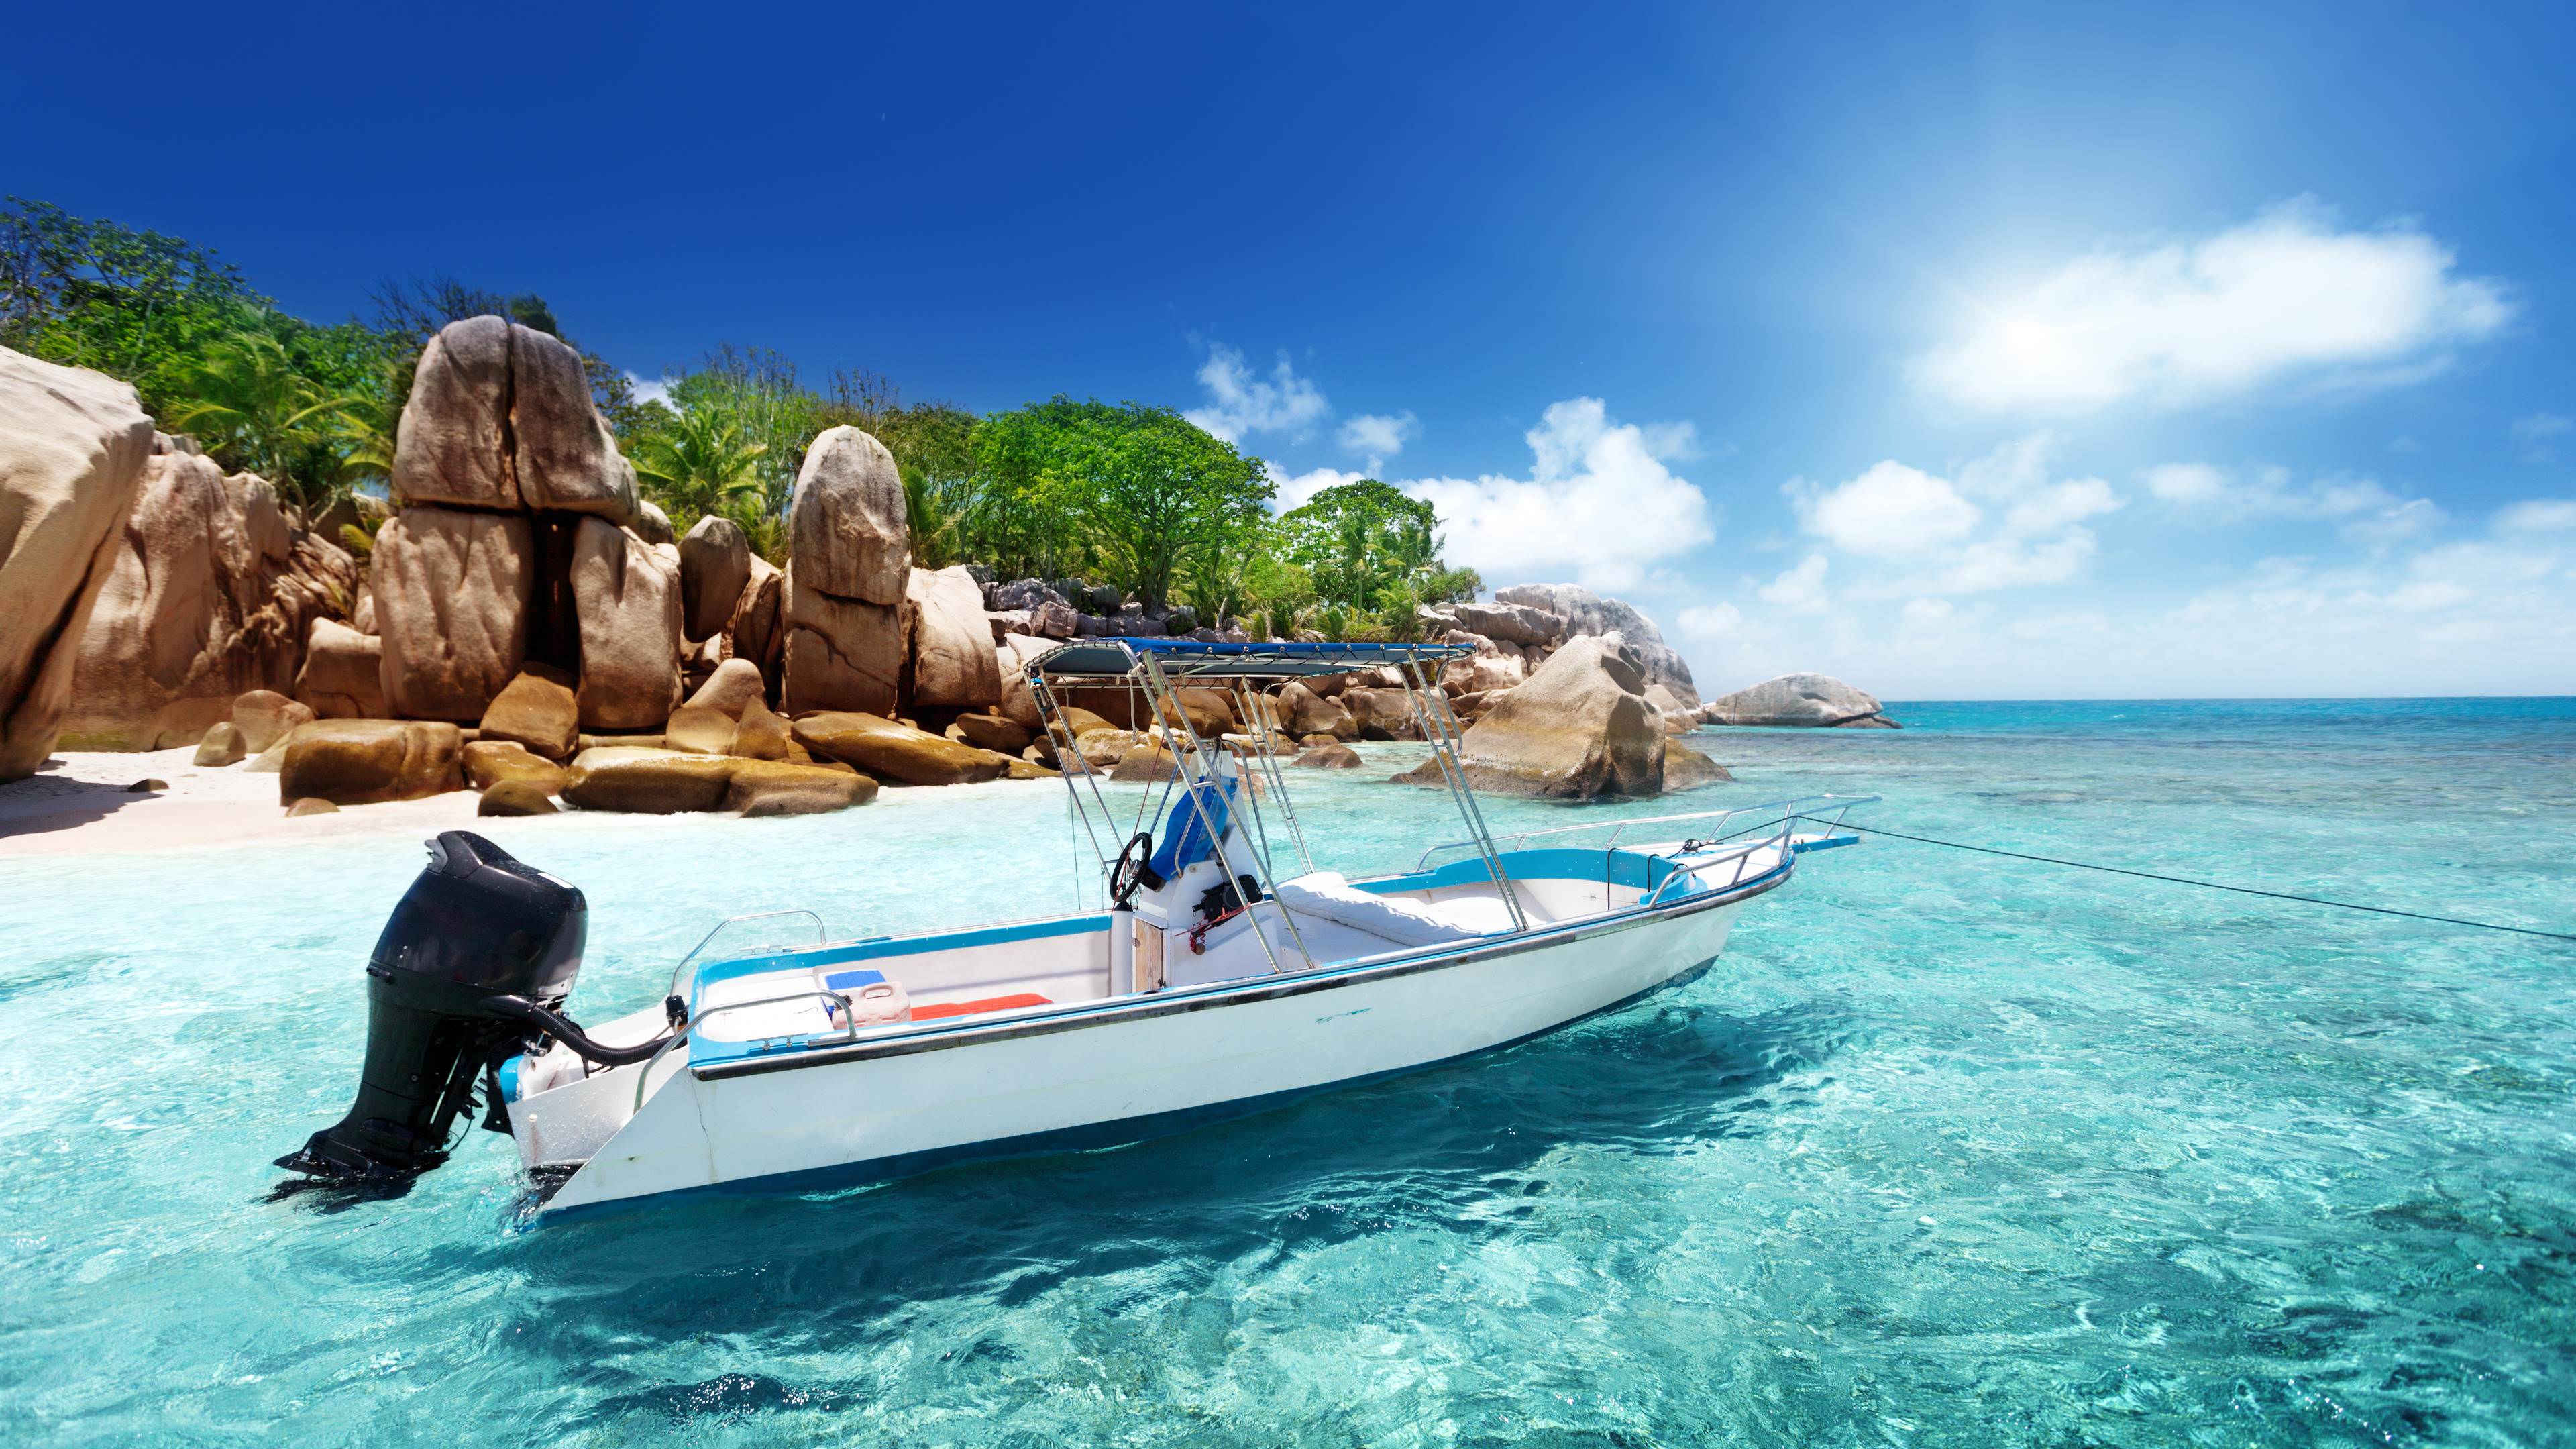 Boat On Tropical Ocean 4K Ultra HD WallpaperK Wallpaper.Net